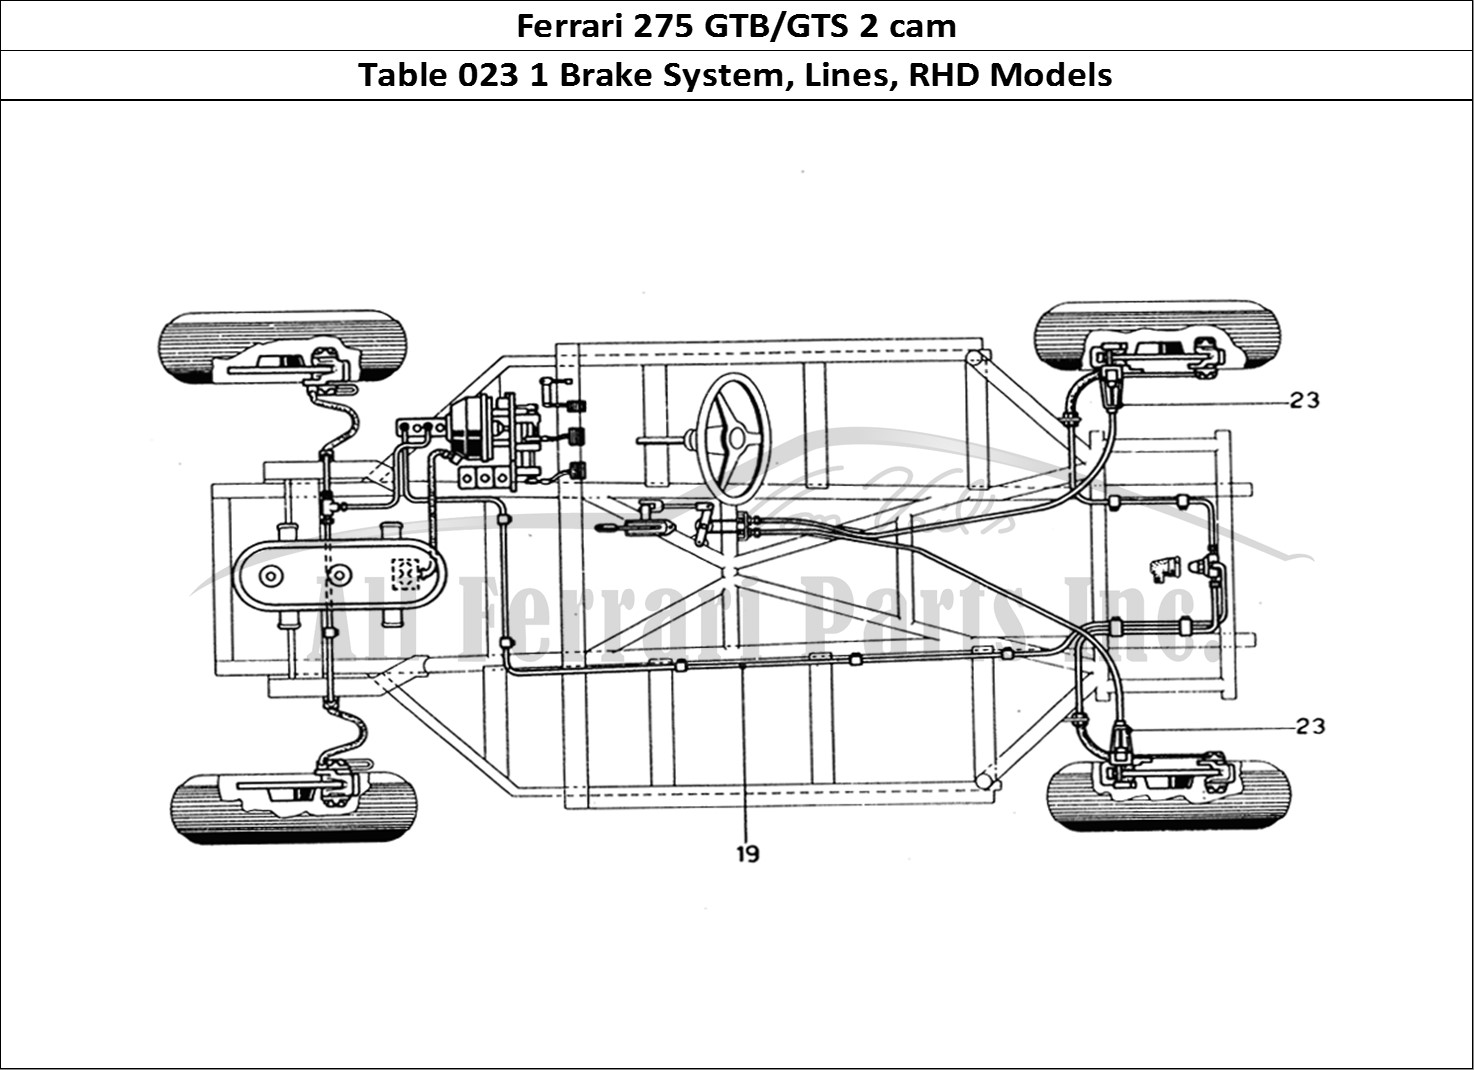 Ferrari Parts Ferrari 275 GTB/GTS 2 cam Page 023 Brake System - RHD models